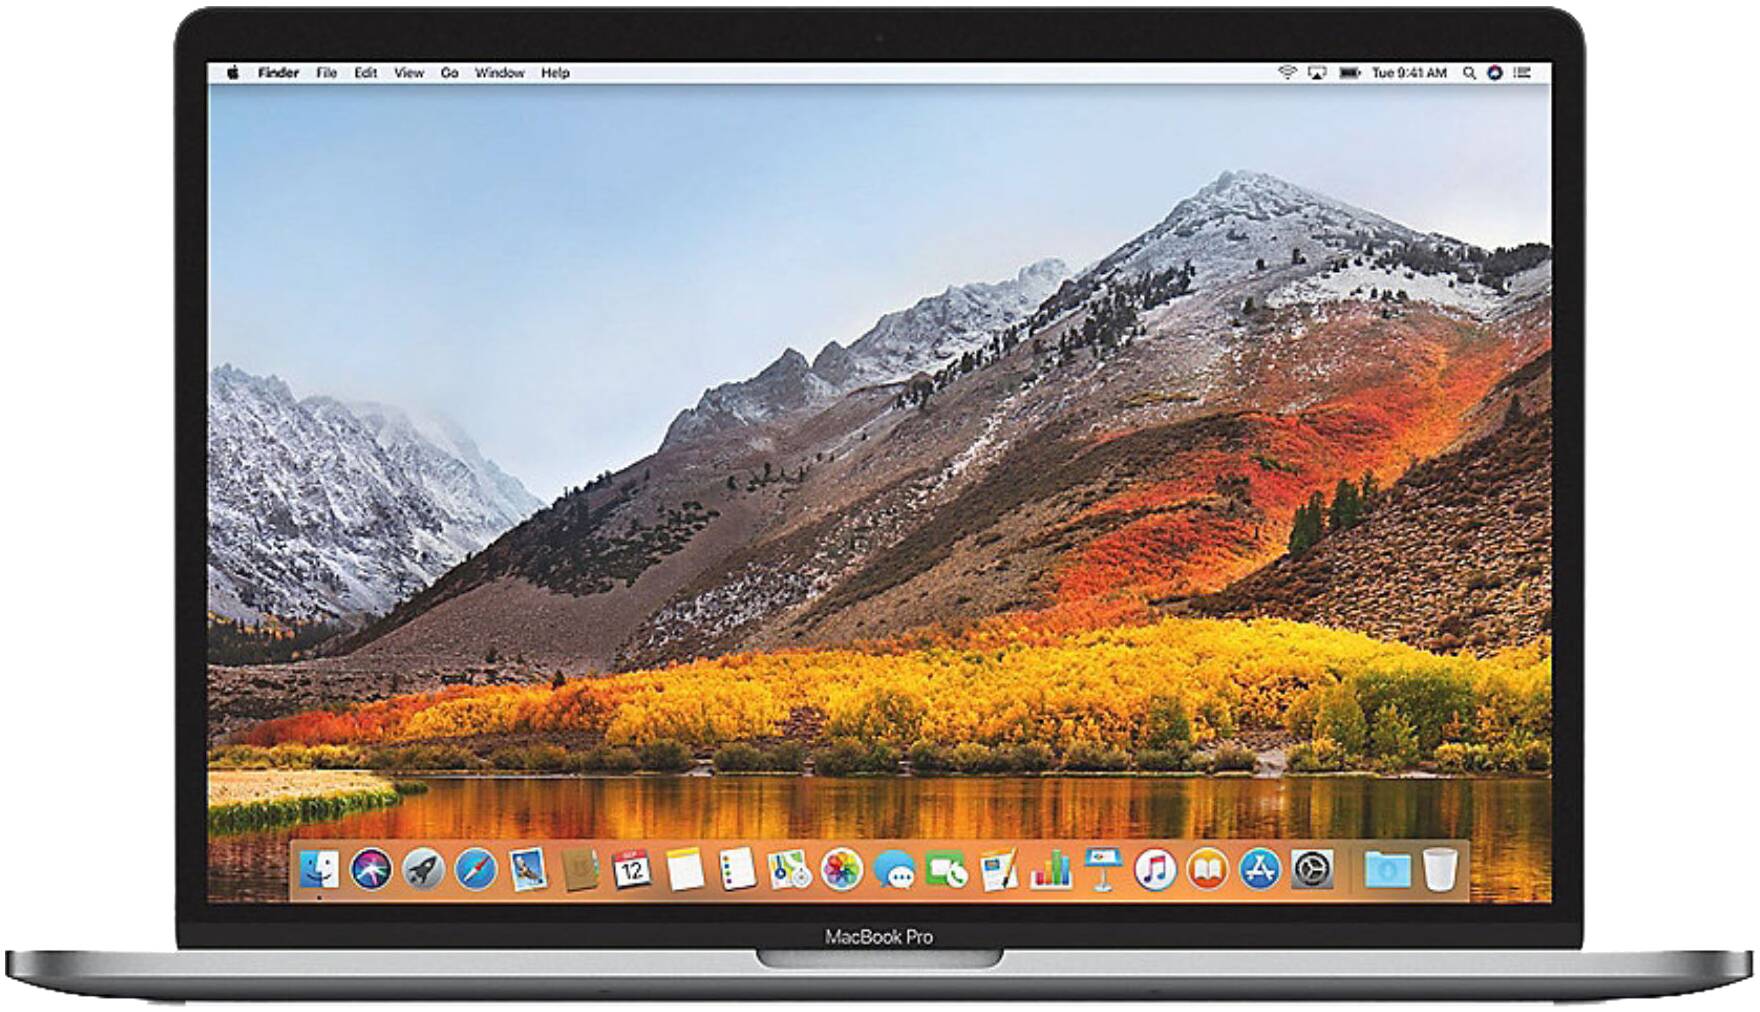 Apple MacBook Pro Retina 15,4